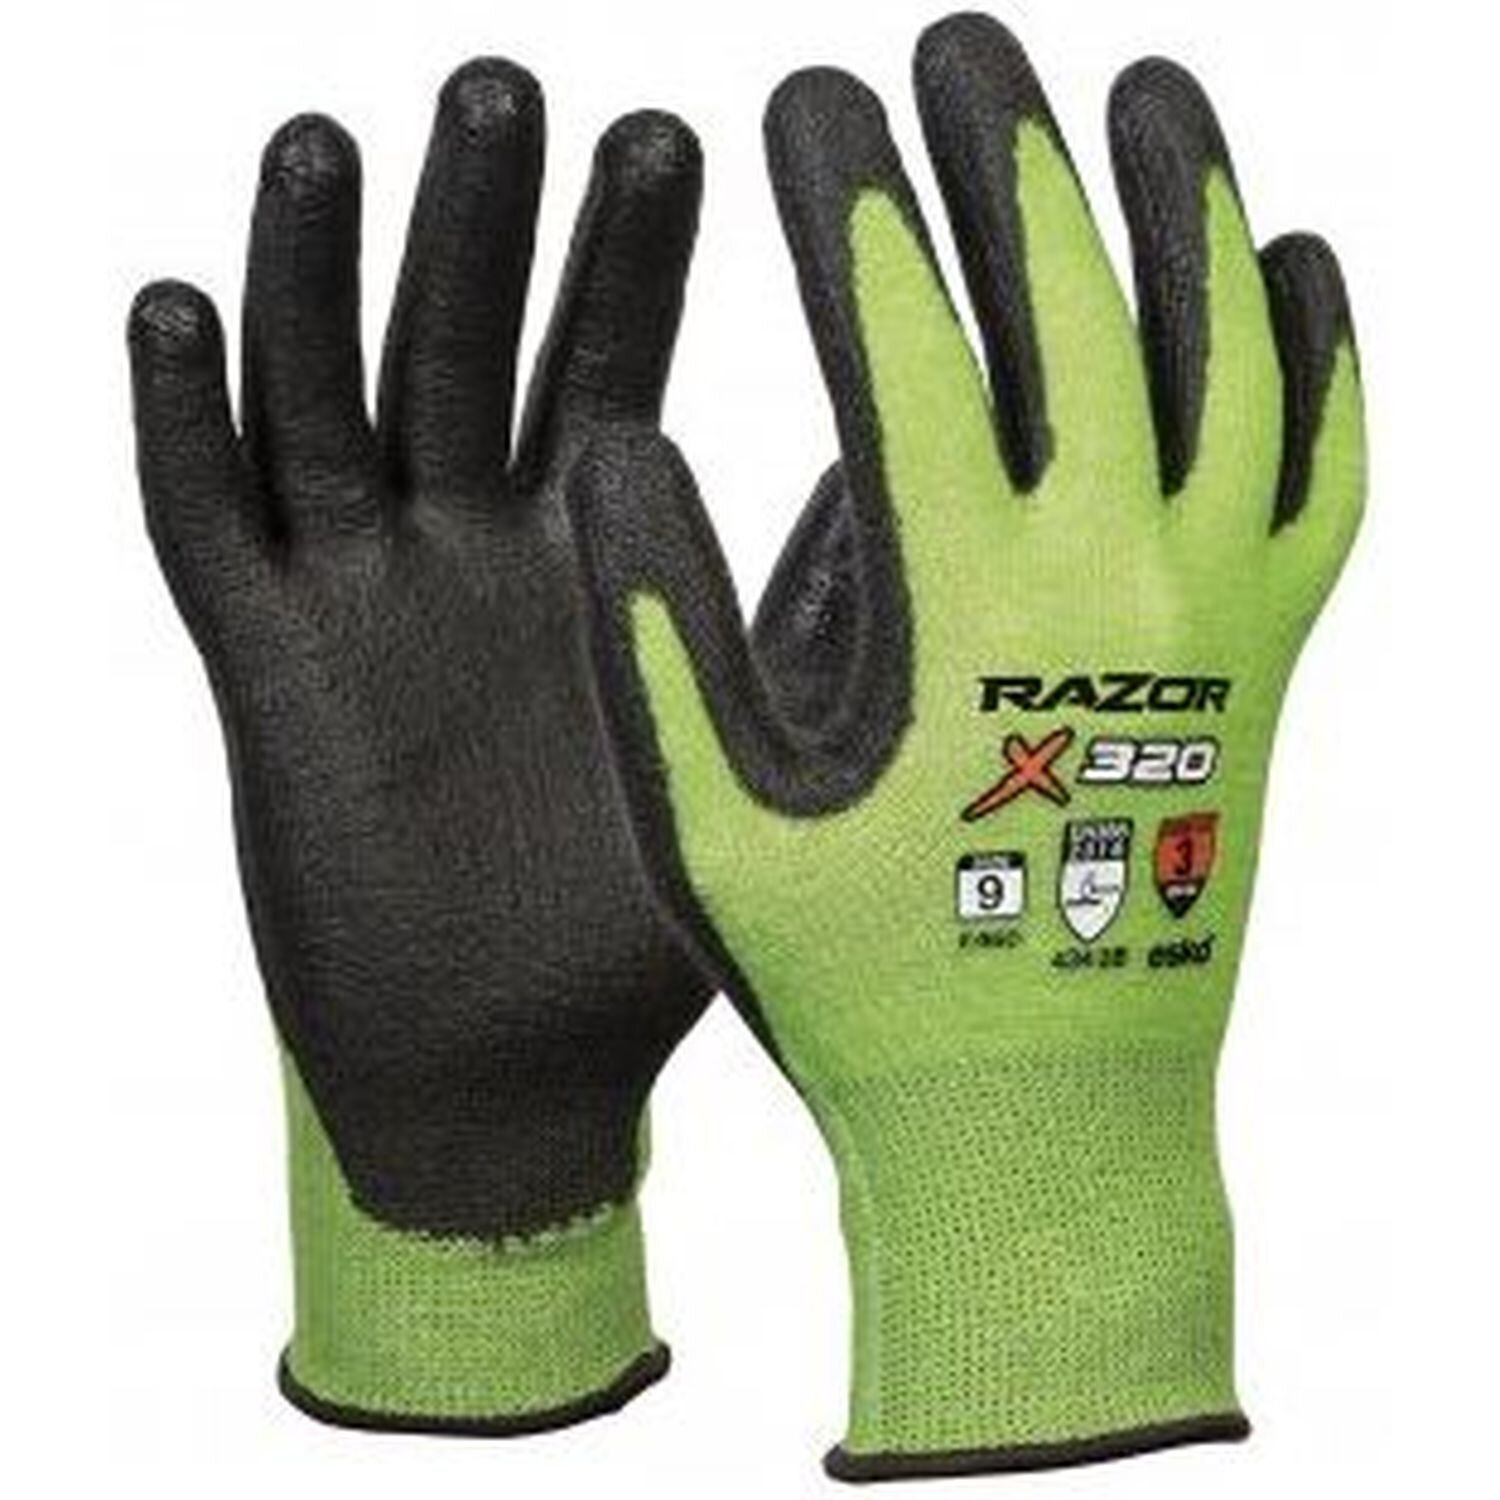 Razor X320 Cut 3 Resistant Level 3 Glove (Pkt 12)